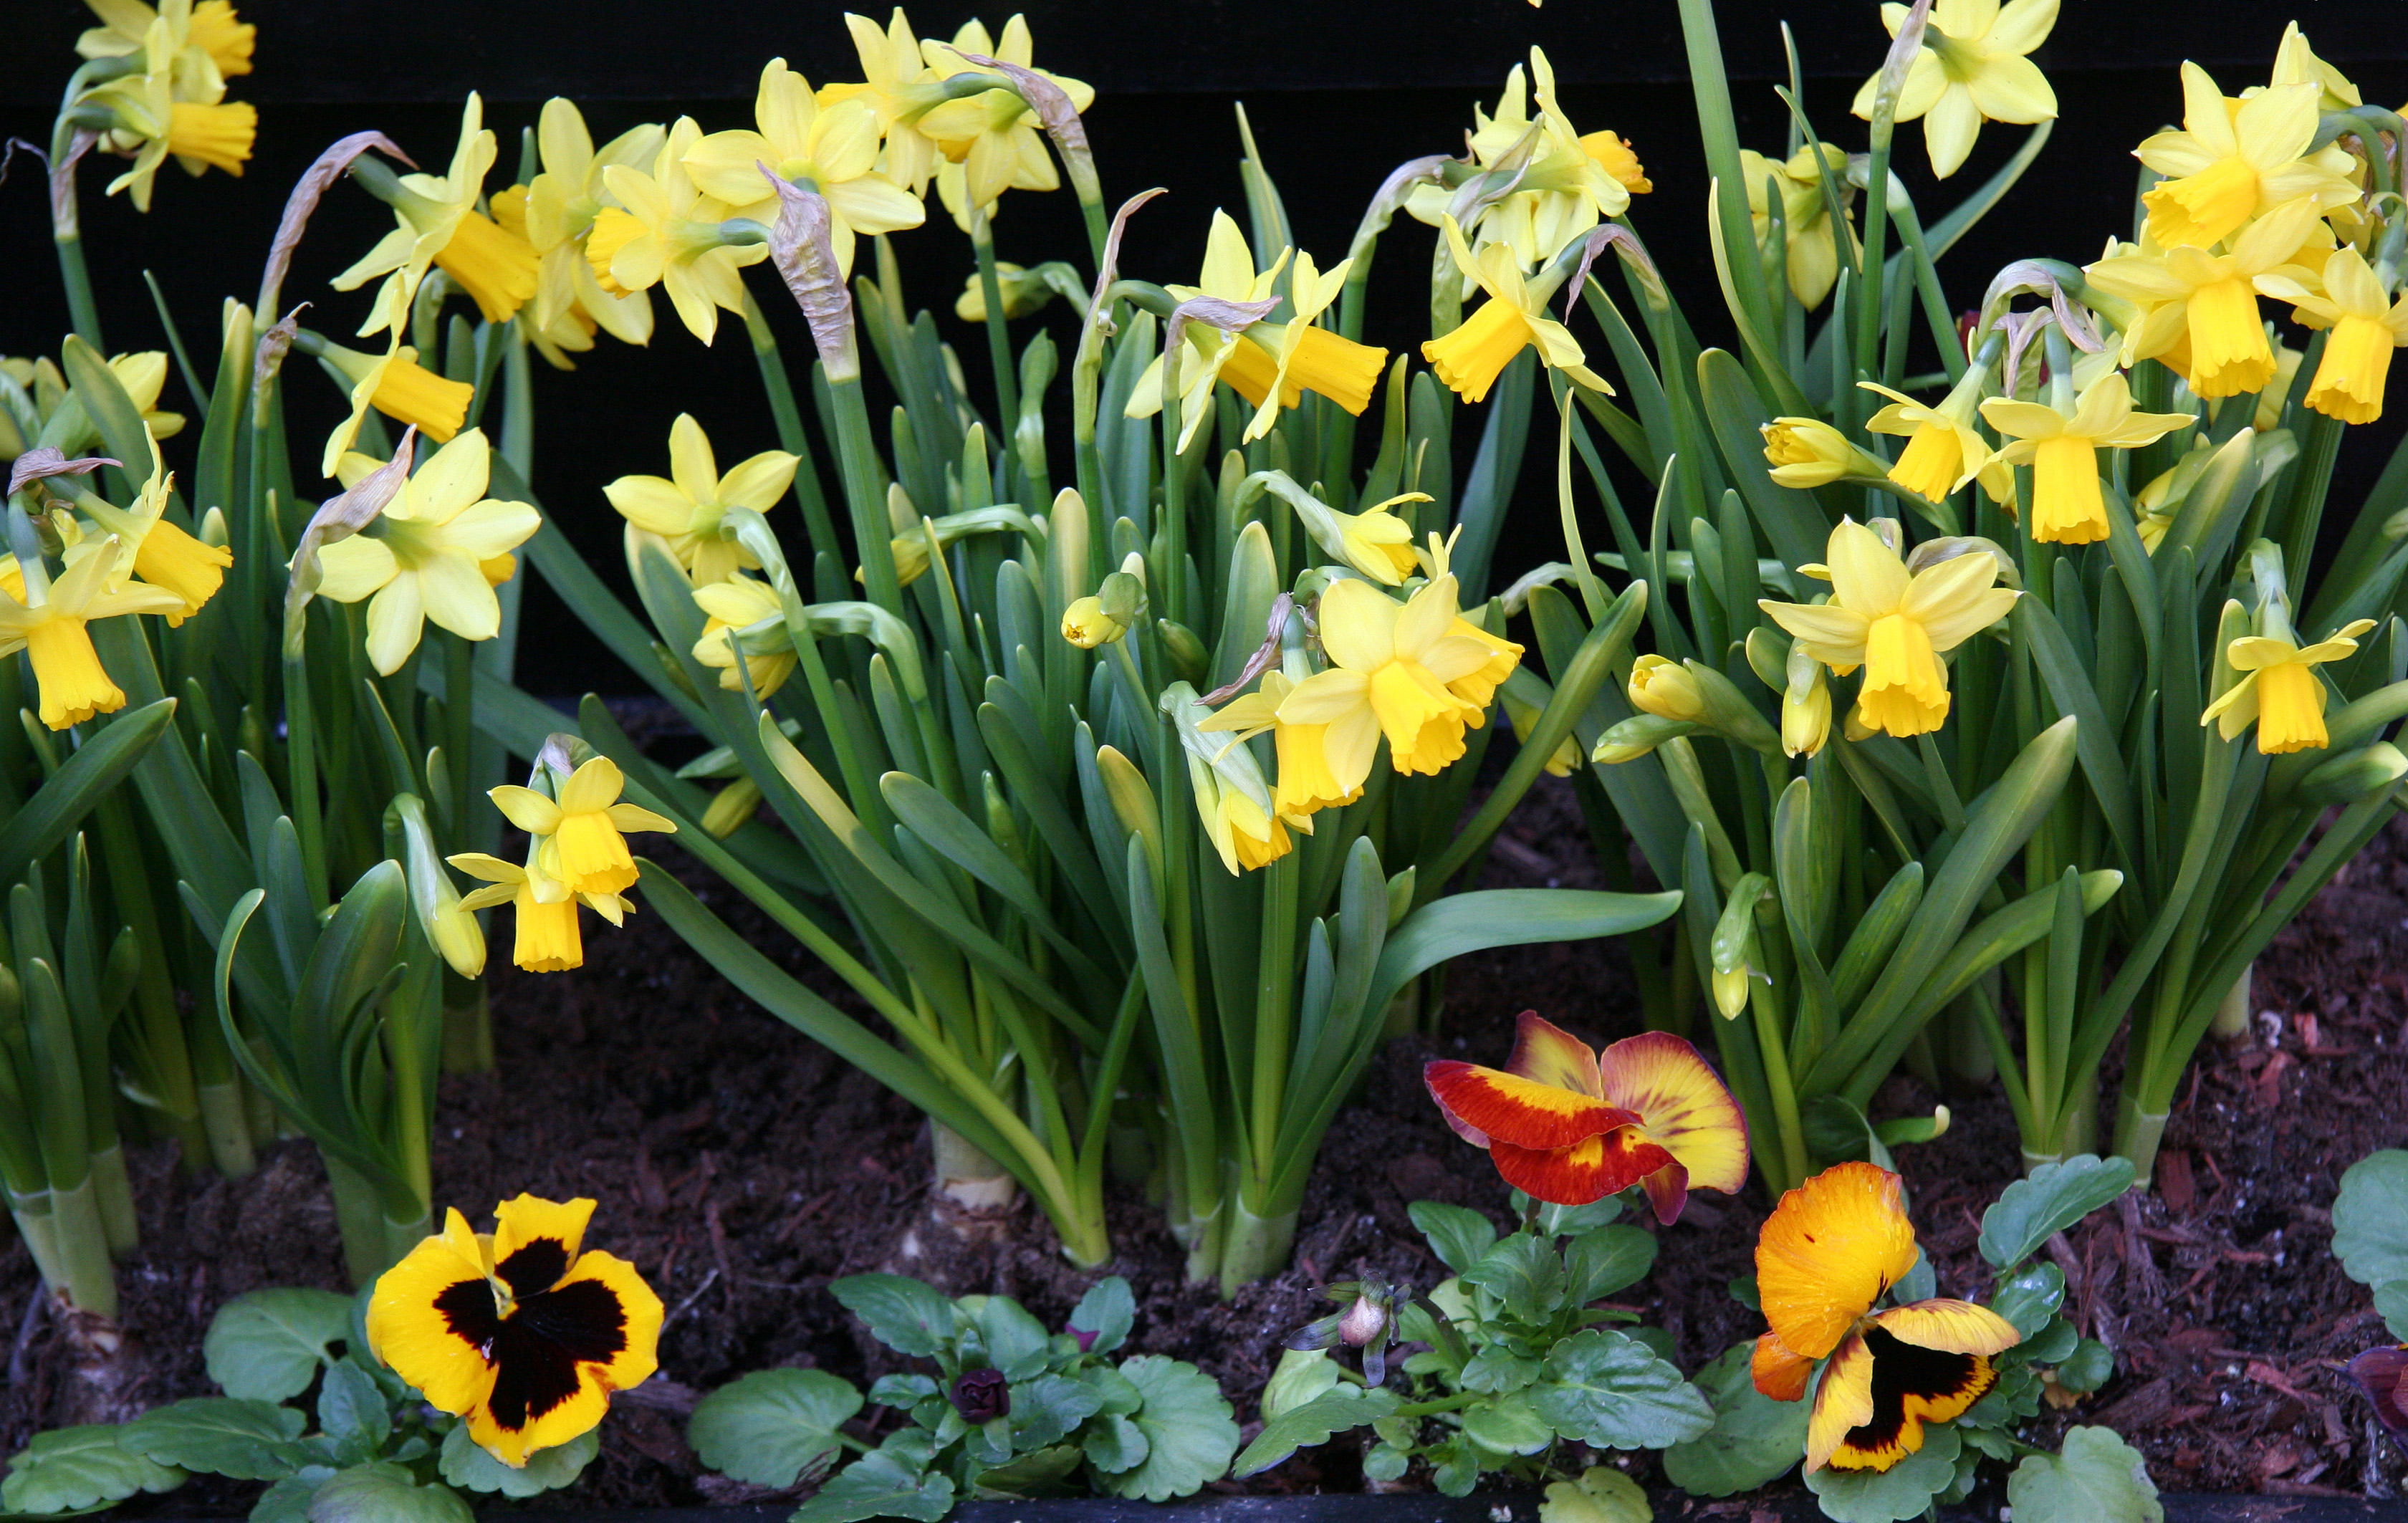 Daffodils & Pansies